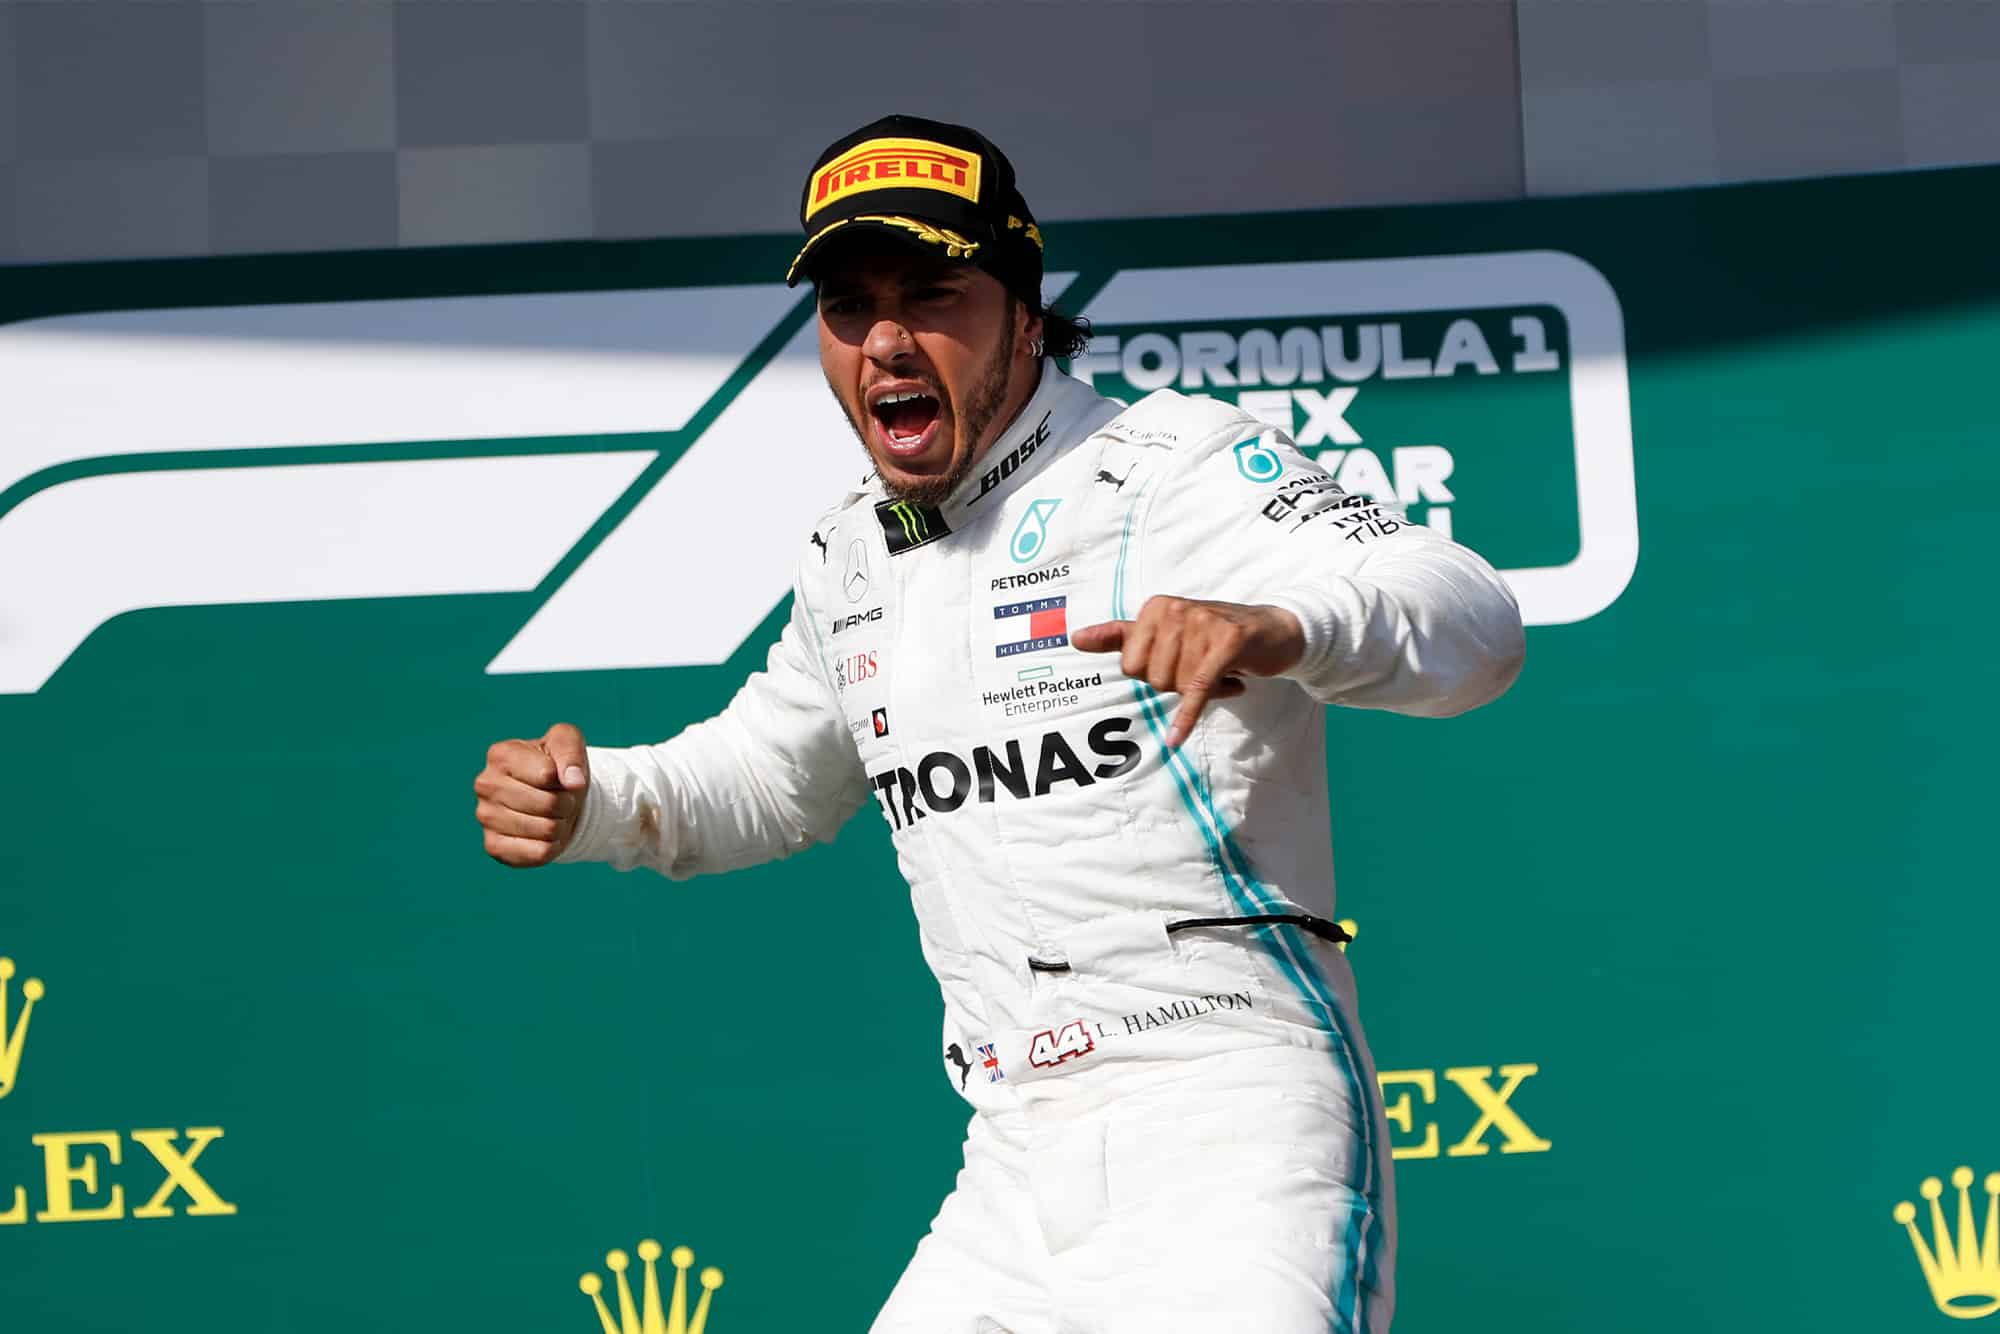 Lewis Hamilton celebrates winning the 2019 Hungarian Grand Prix